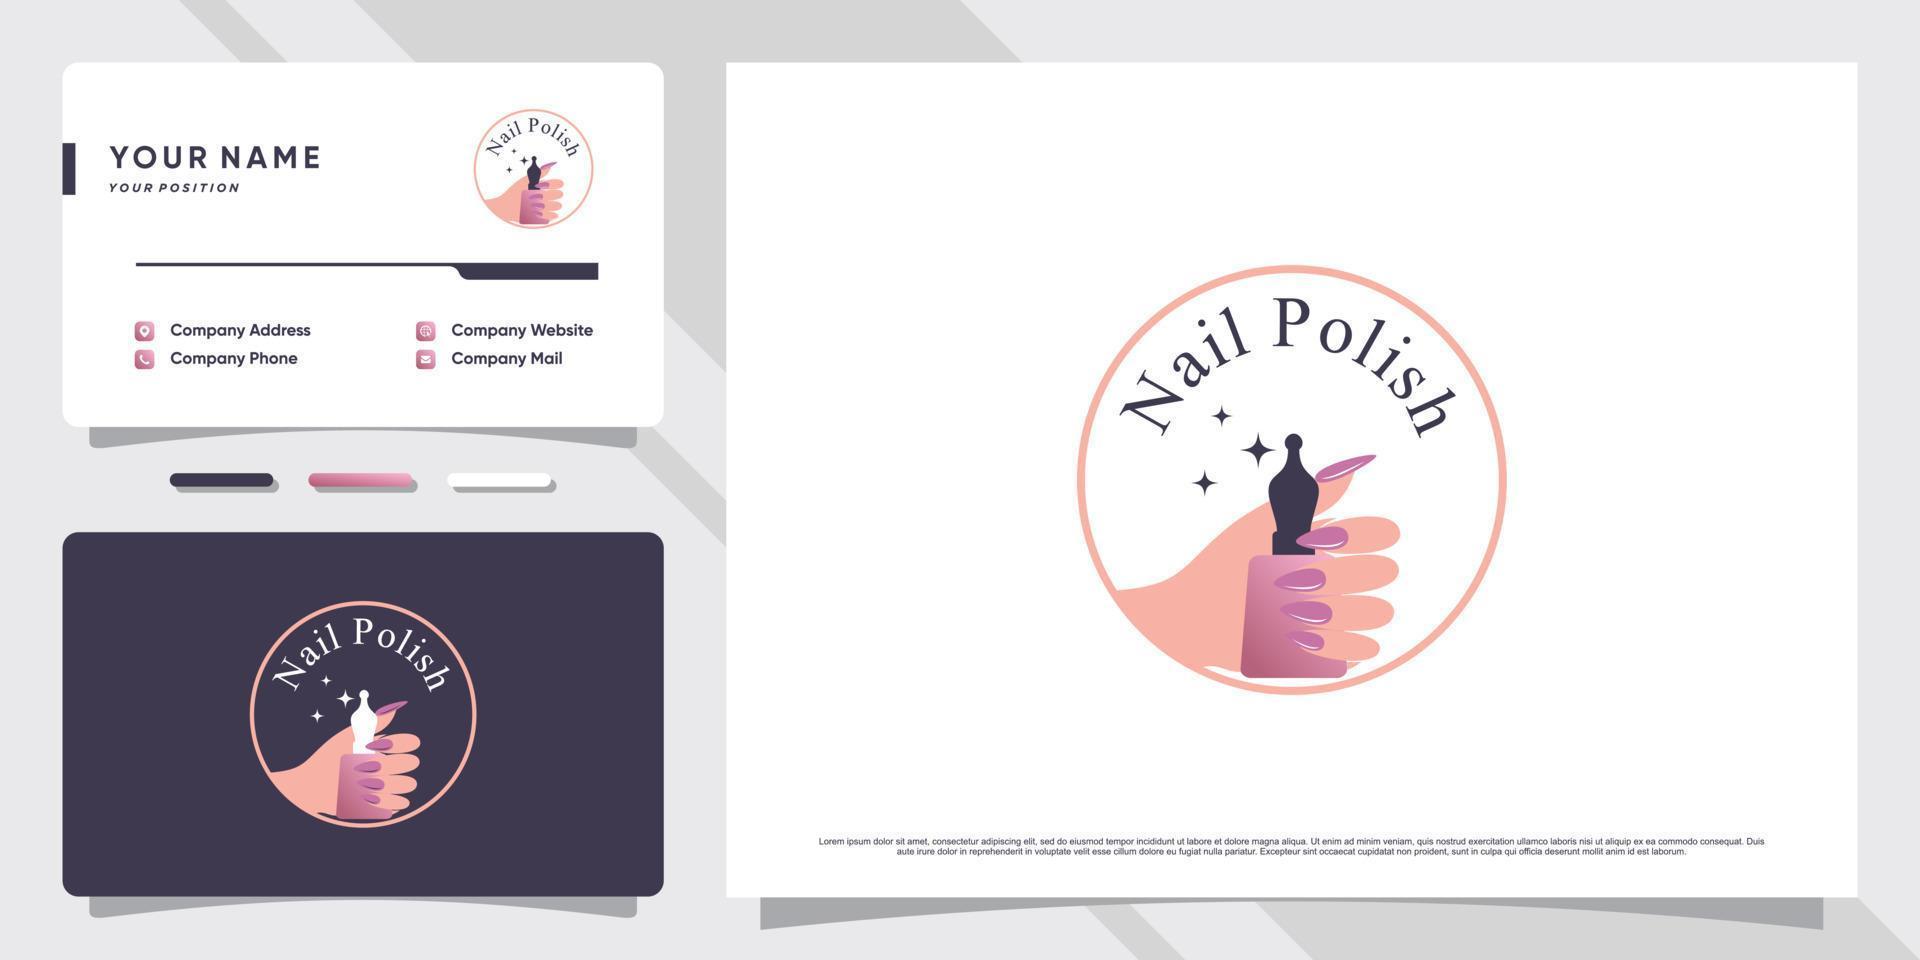 Nail polish or nail salon logo with creative element and business card design Premium Vector